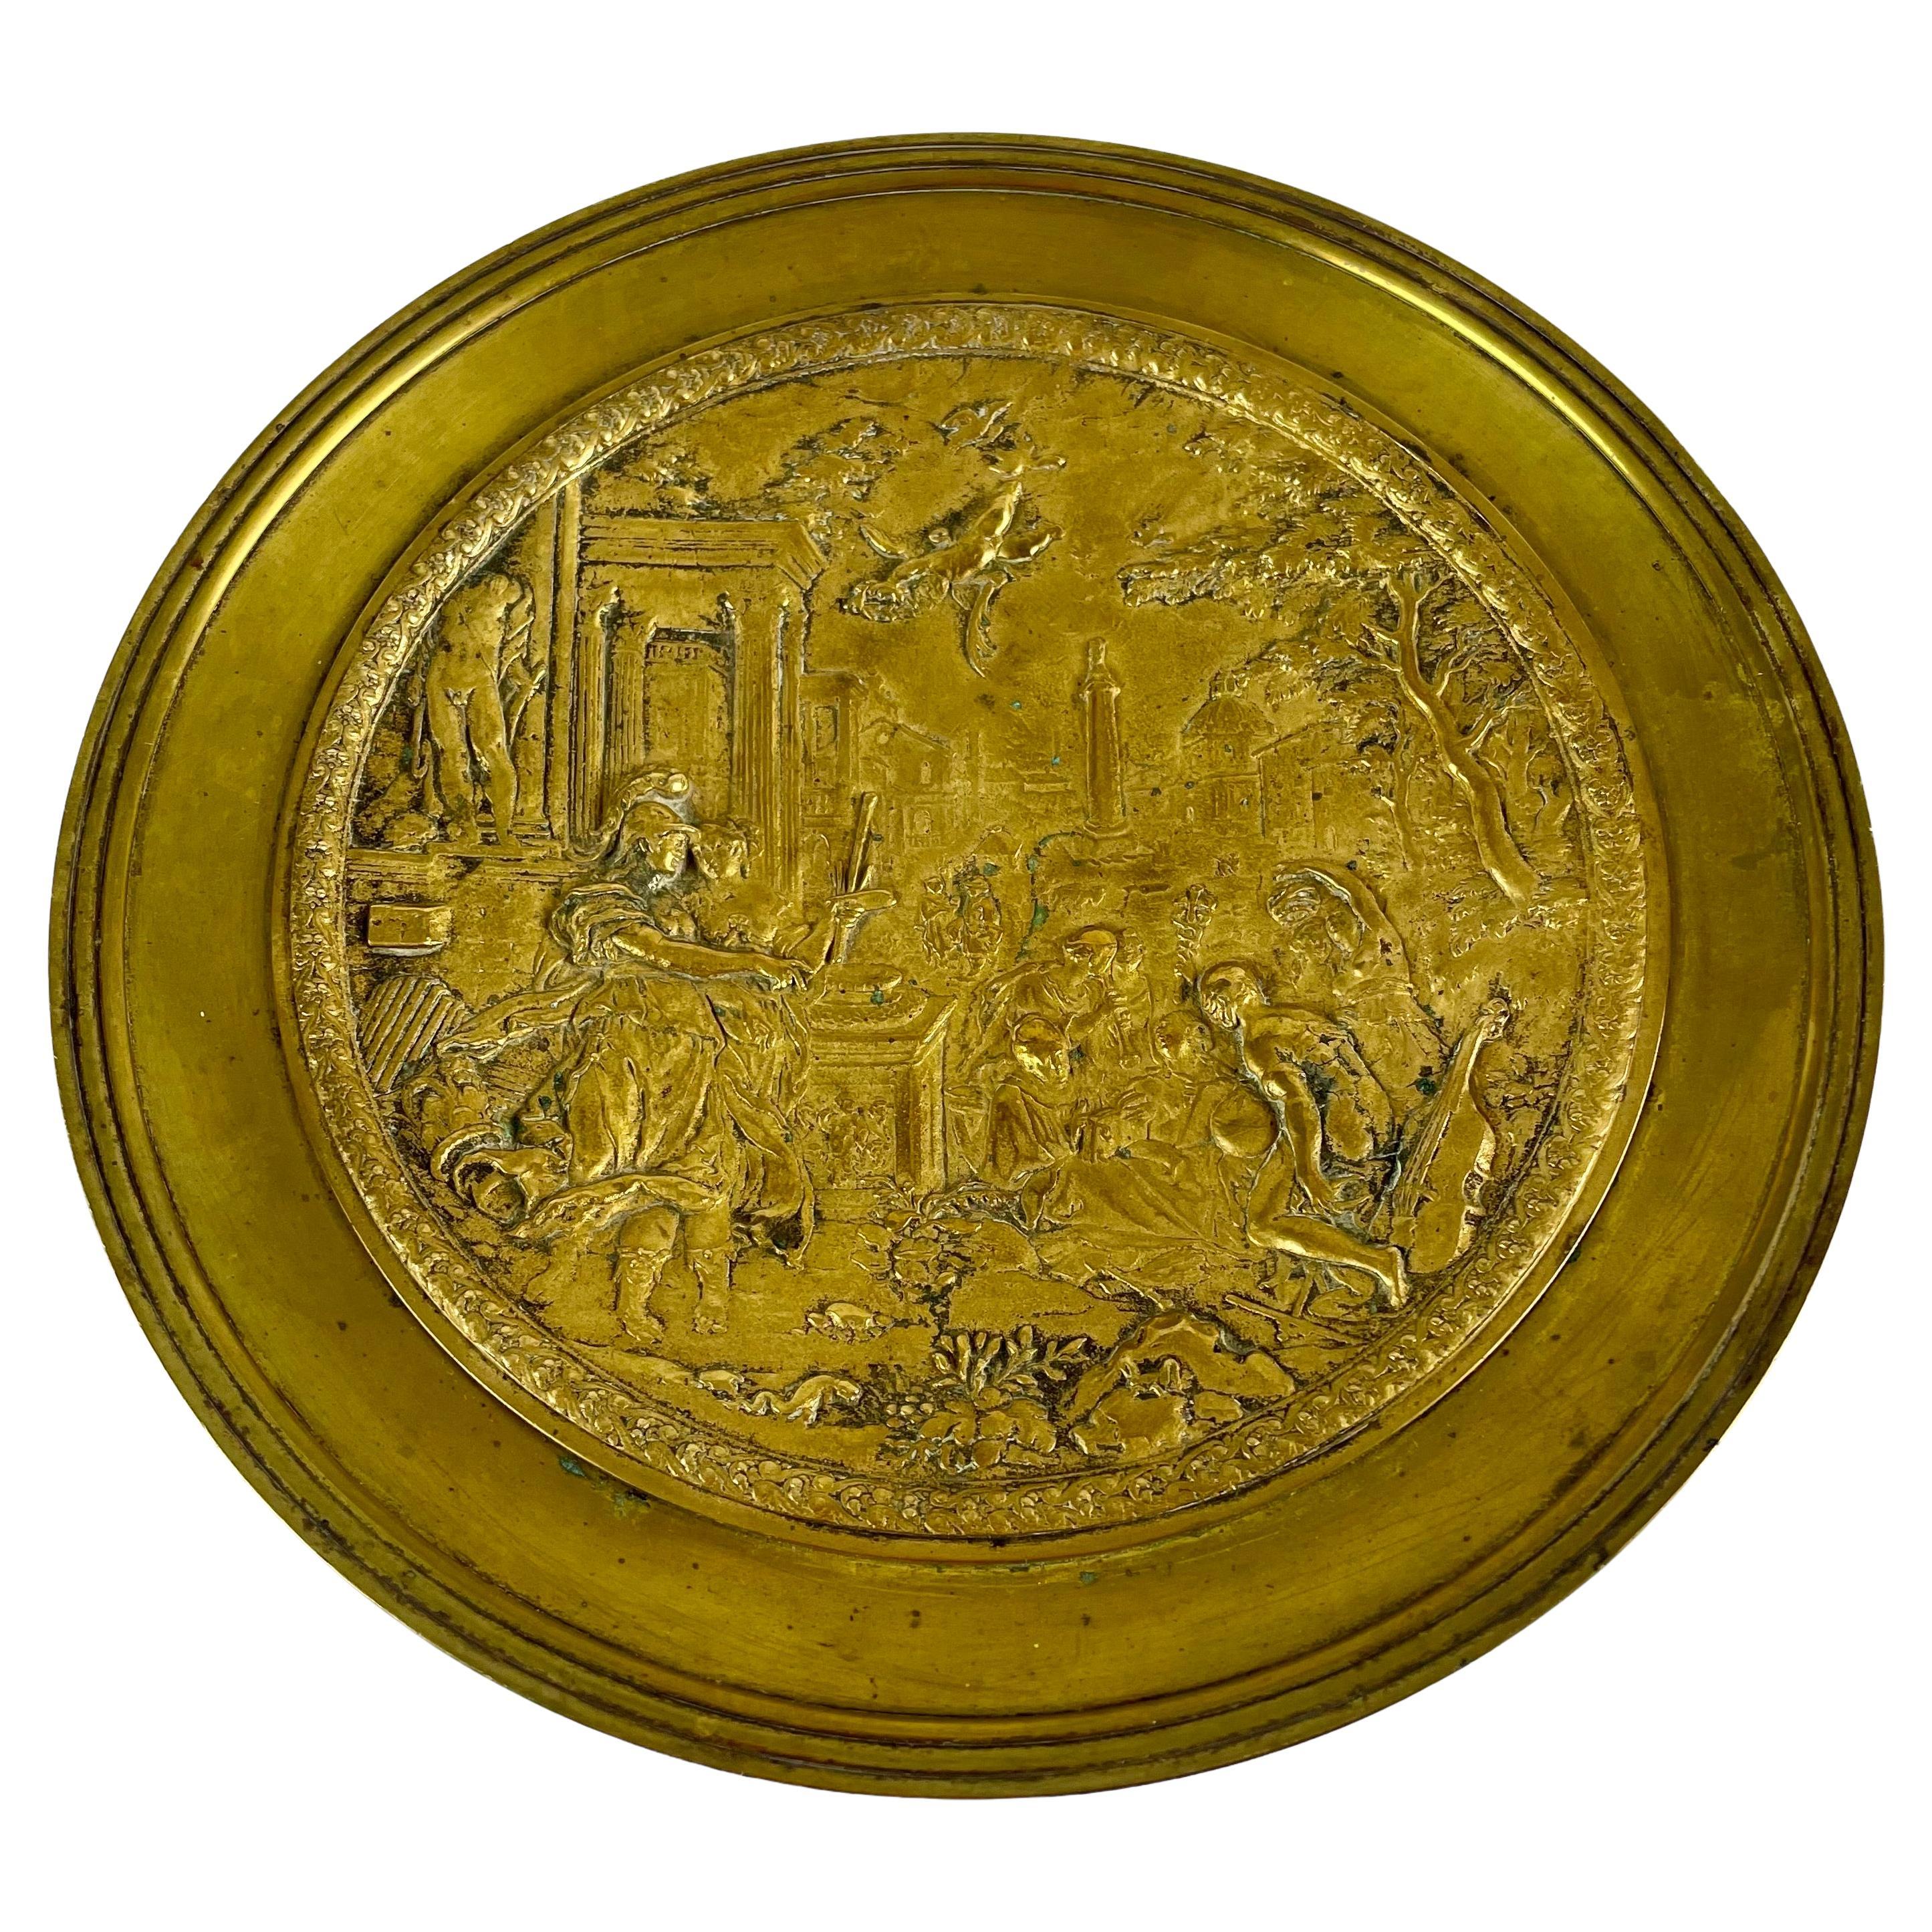 Tazza Neo Renaissance Pair of Cups Gilt Bronze Decor Deities of Antiquity 19thC. For Sale 4